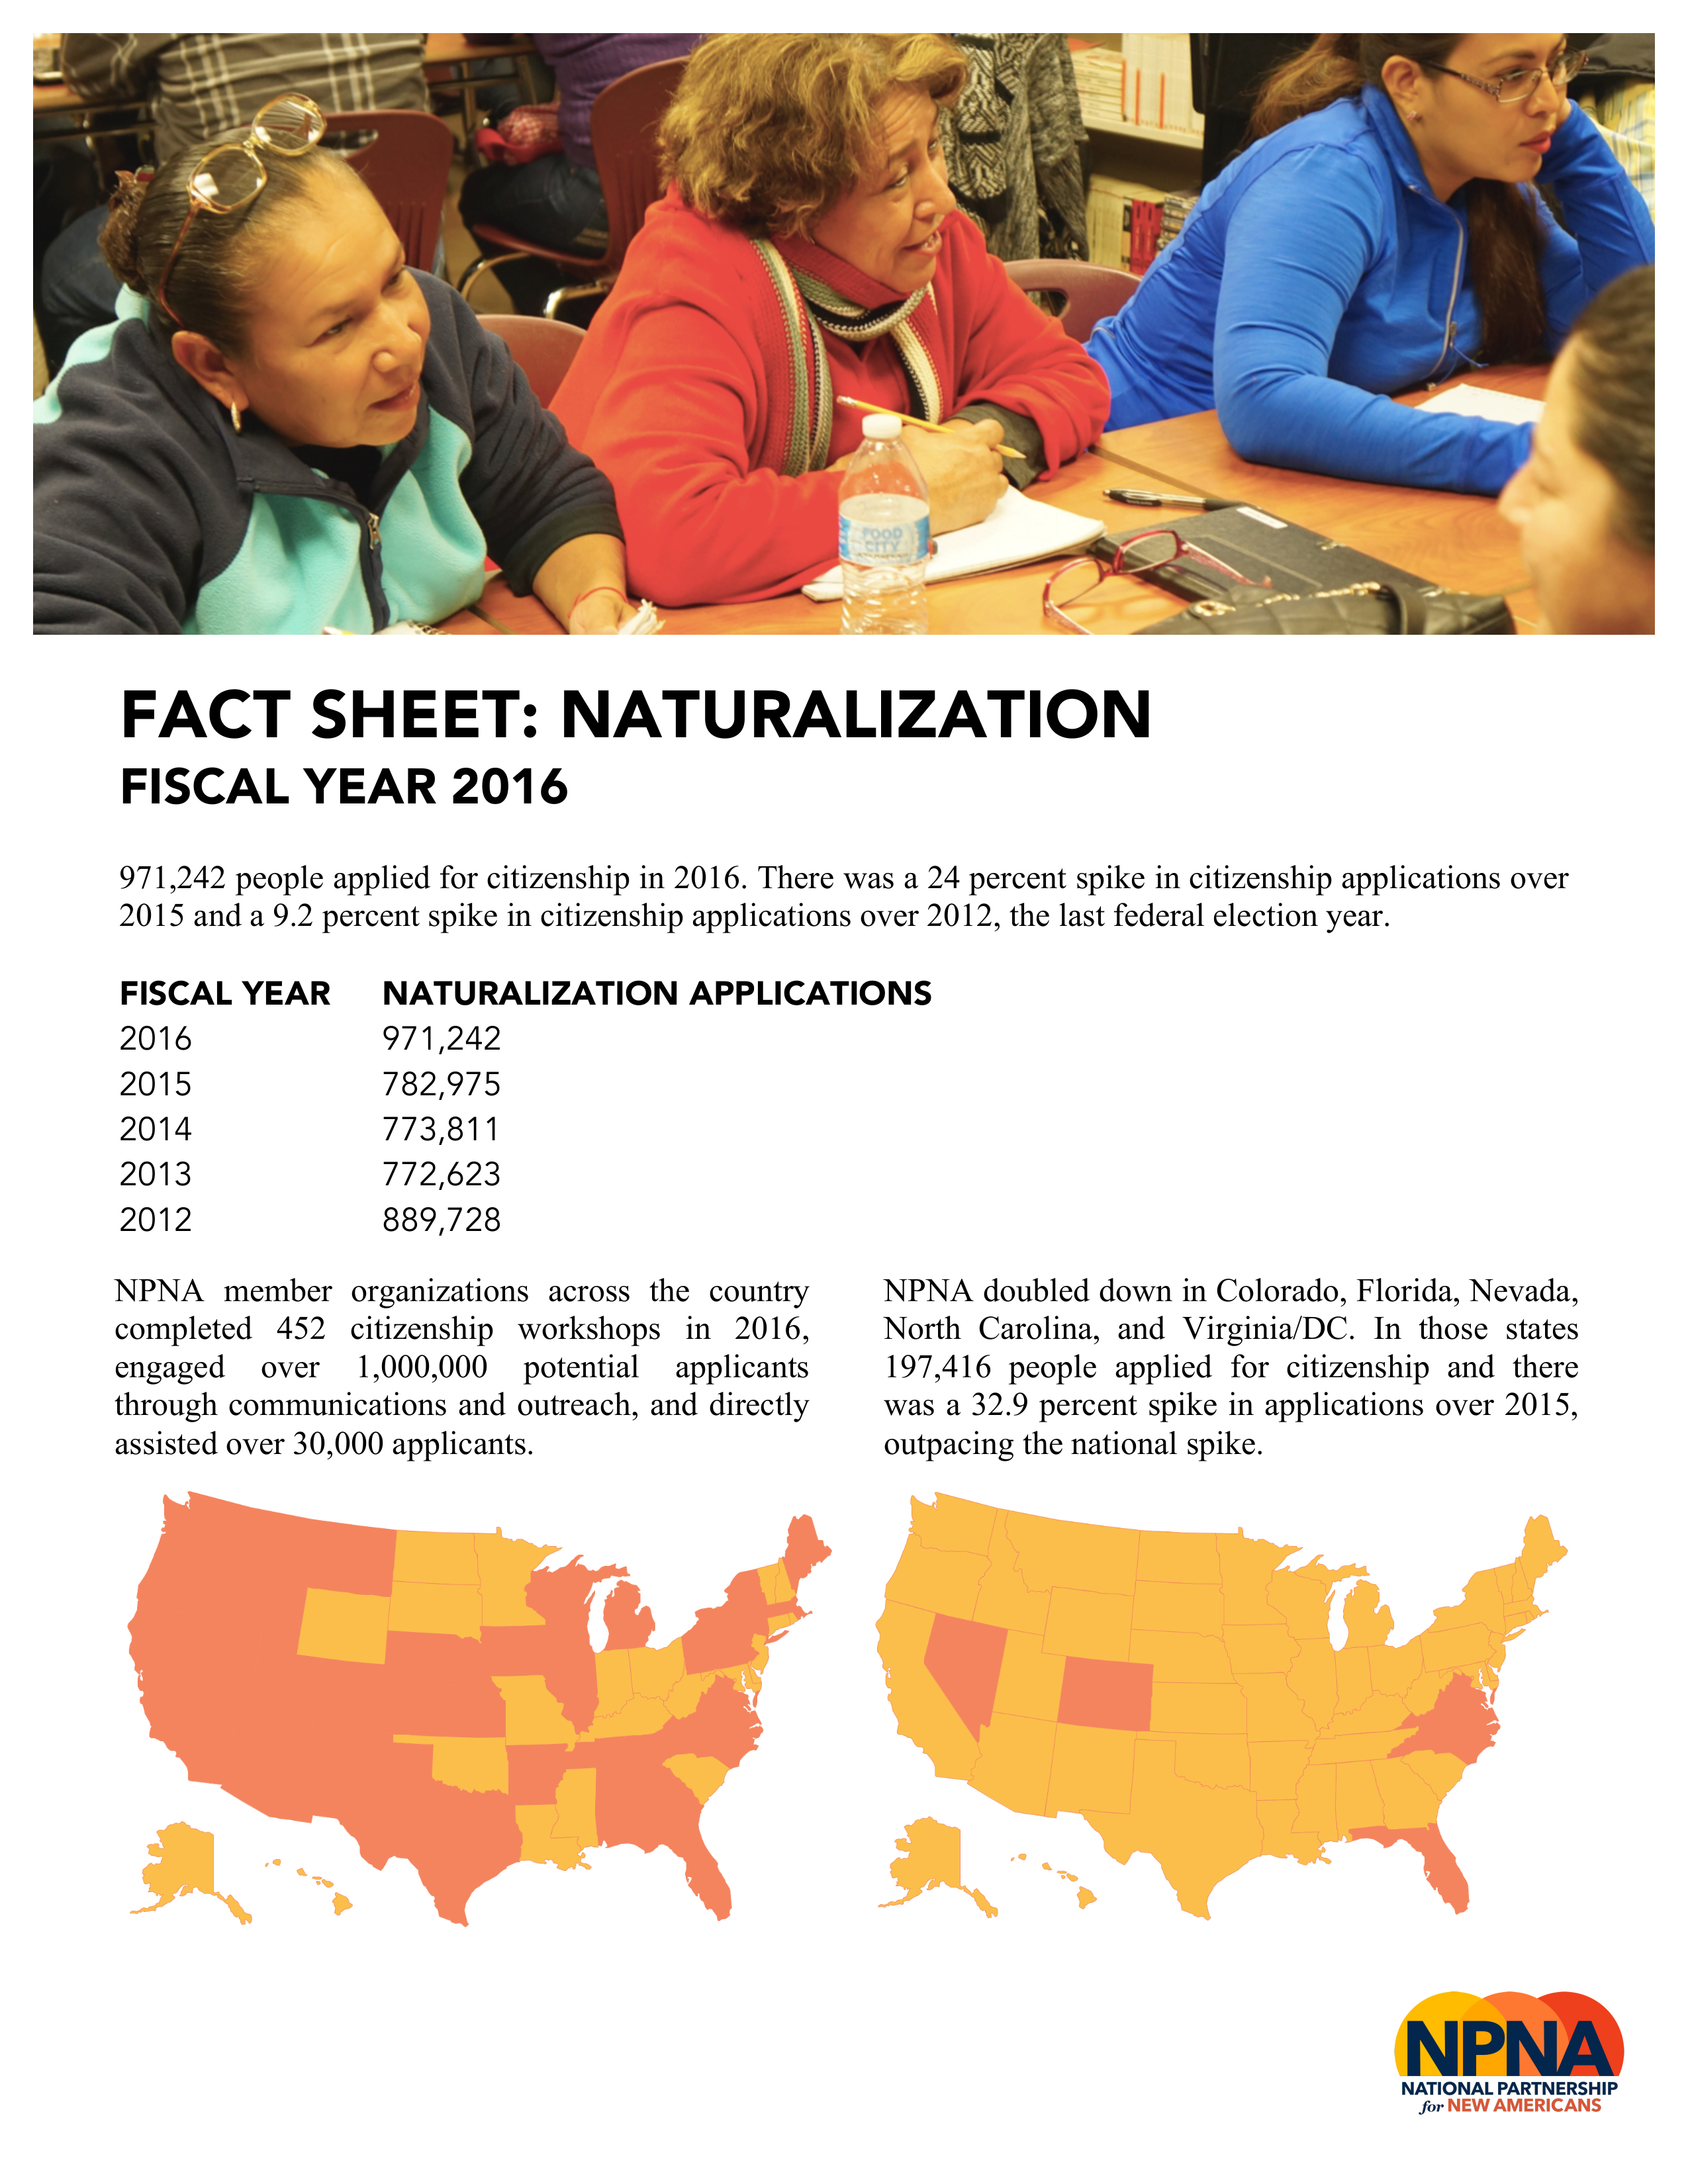 Naturalization Facts